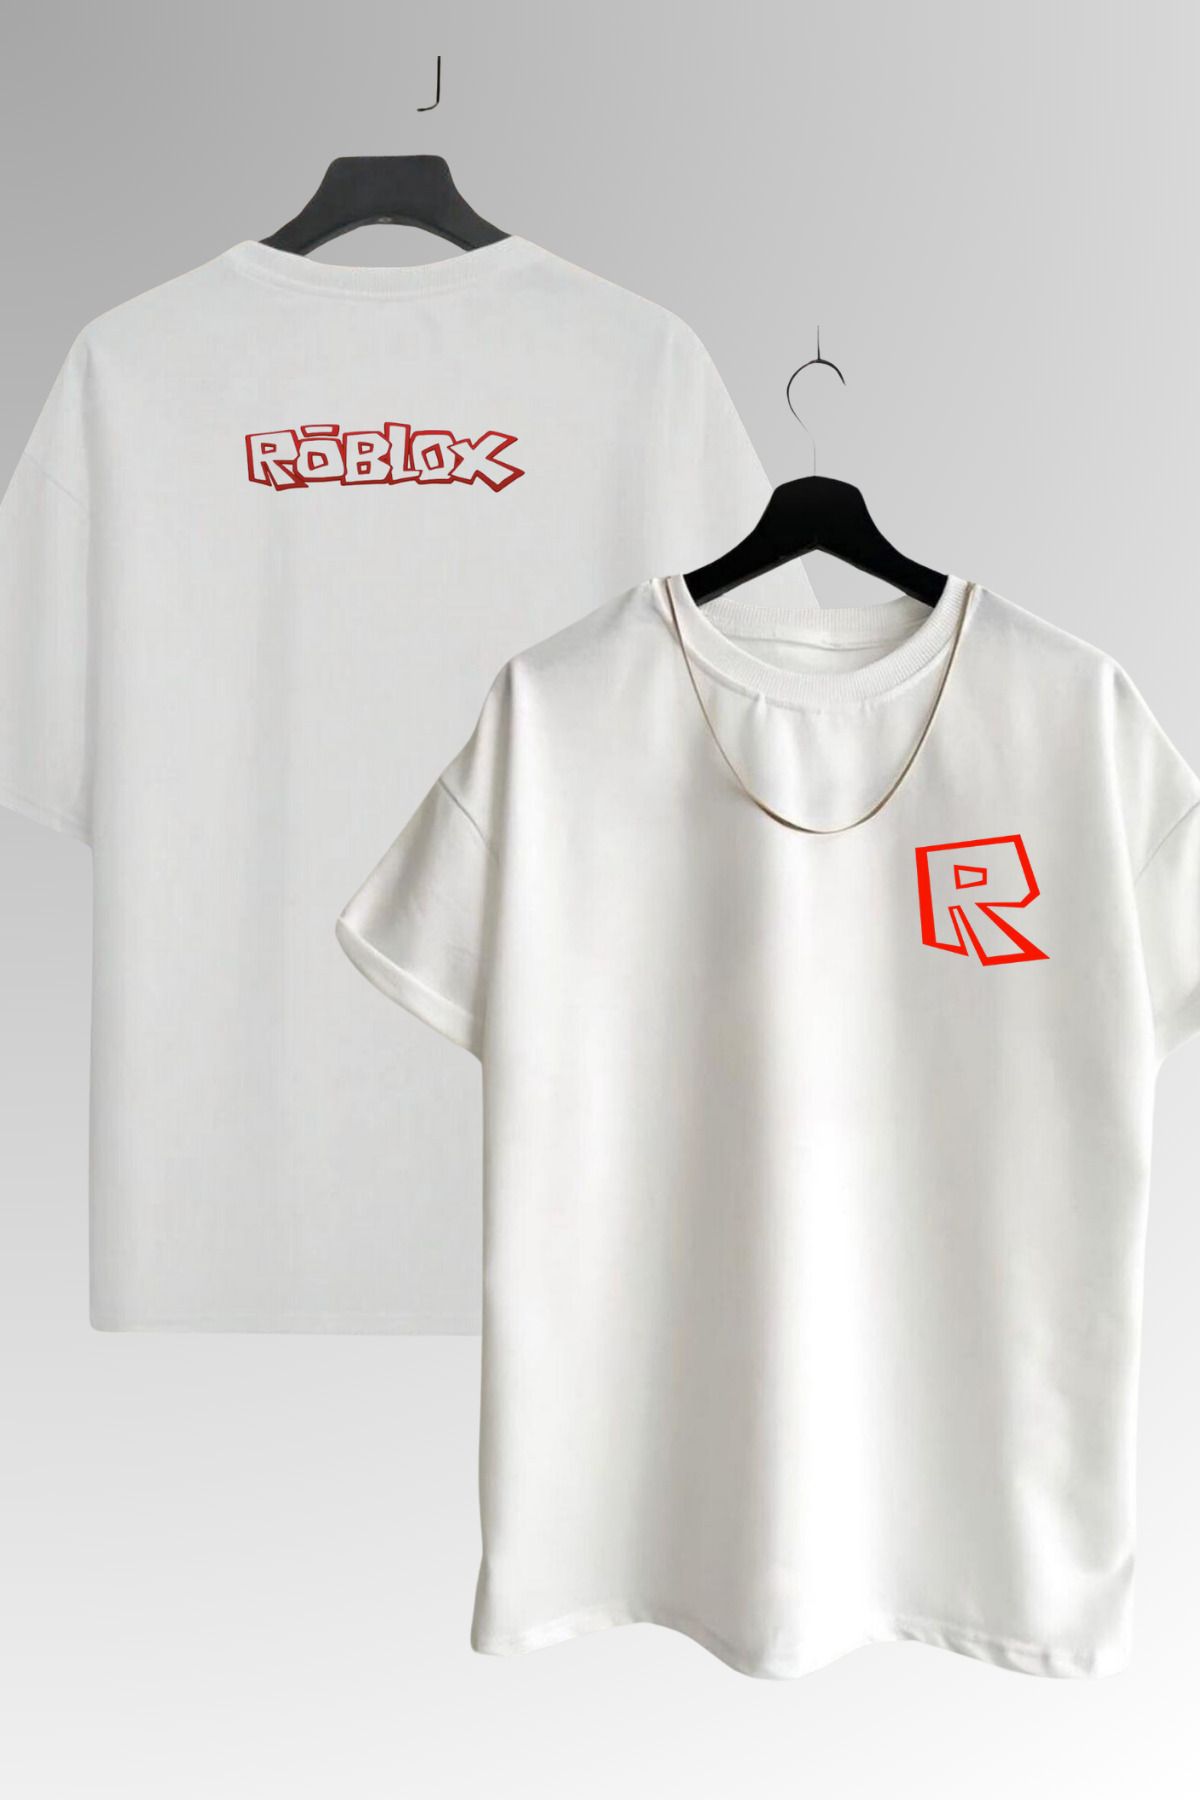 AEMİ Unisex Roblox Röblox Game Baskılı Tshirt Oyun Oversize  %100 Pamuklu Tişört